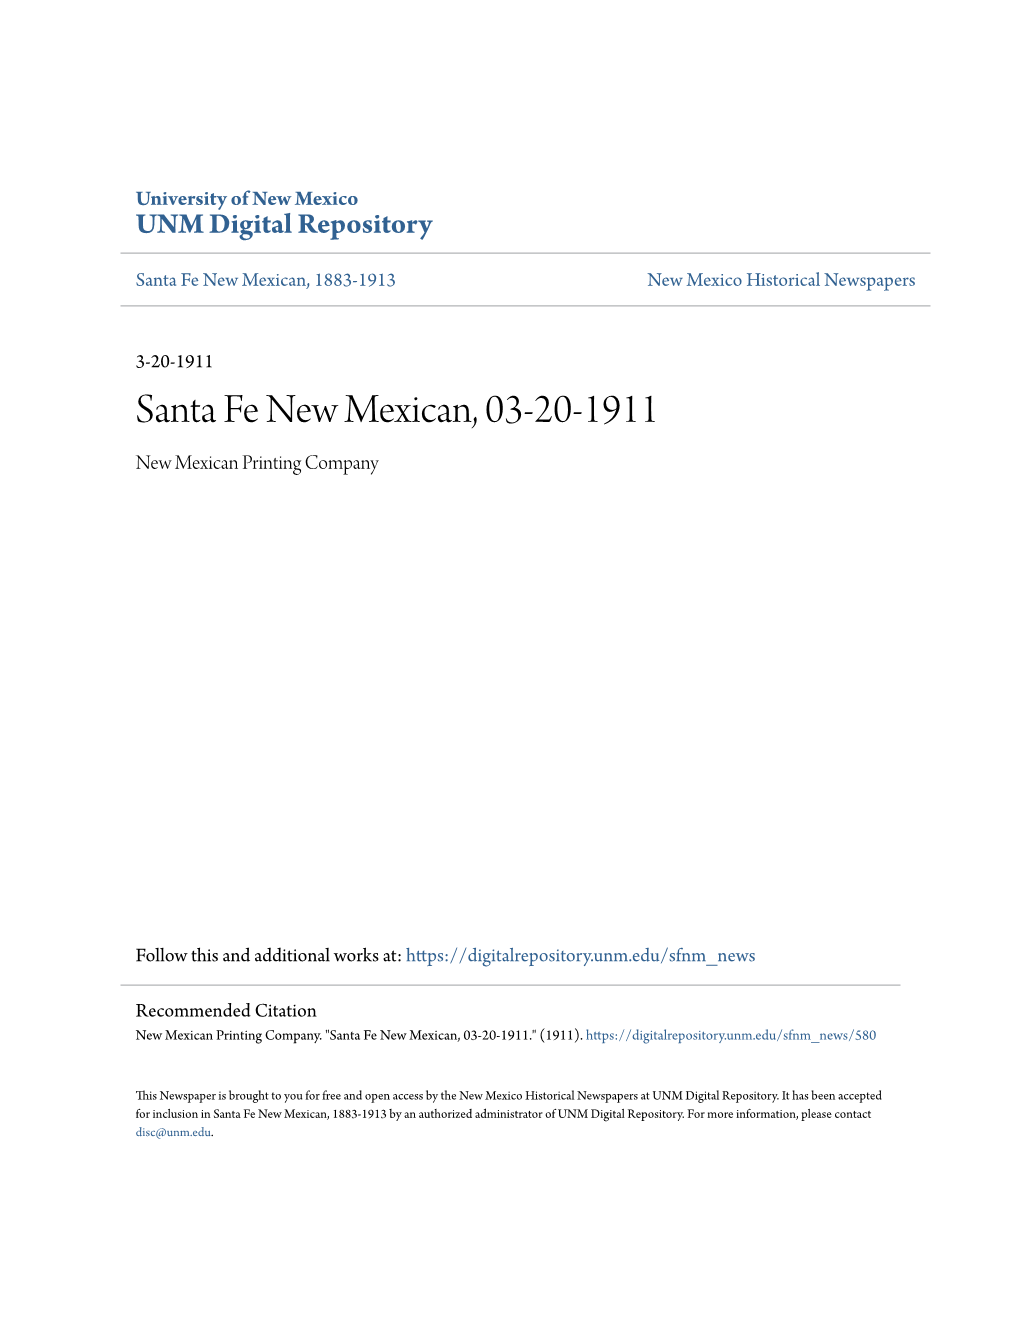 Santa Fe New Mexican, 03-20-1911 New Mexican Printing Company